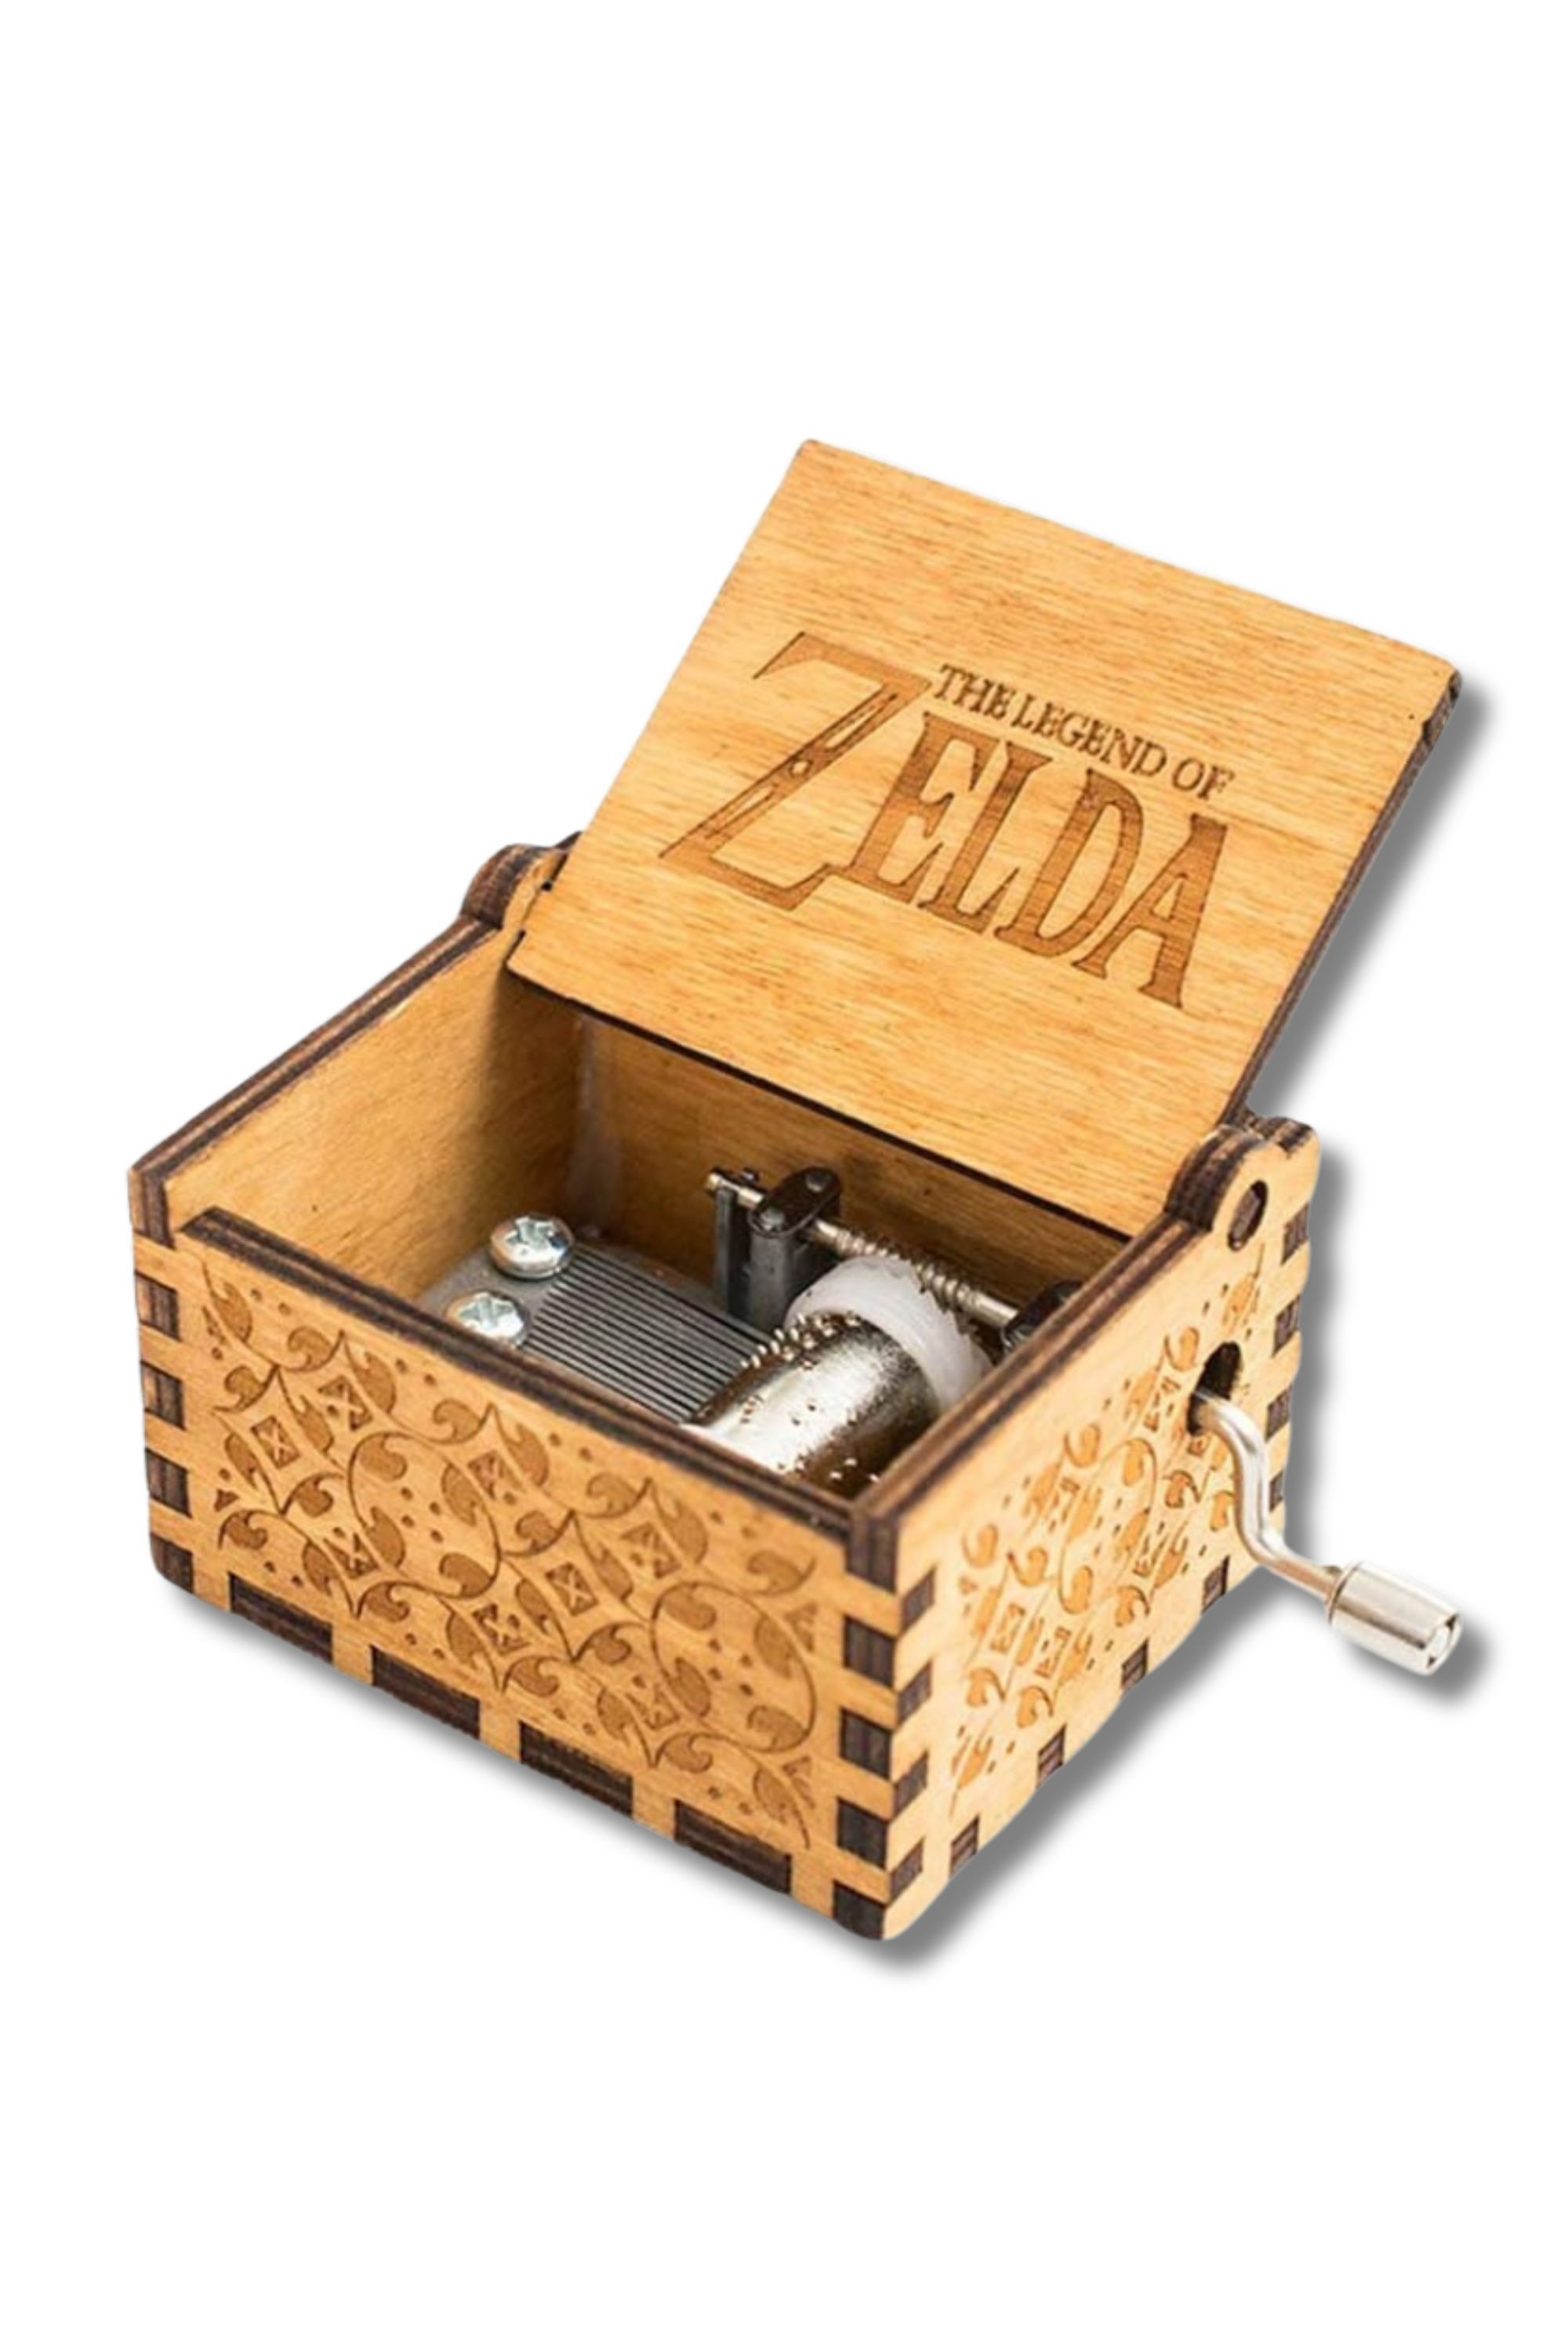 The Legend of Zelda Engraved Wooden Music Box